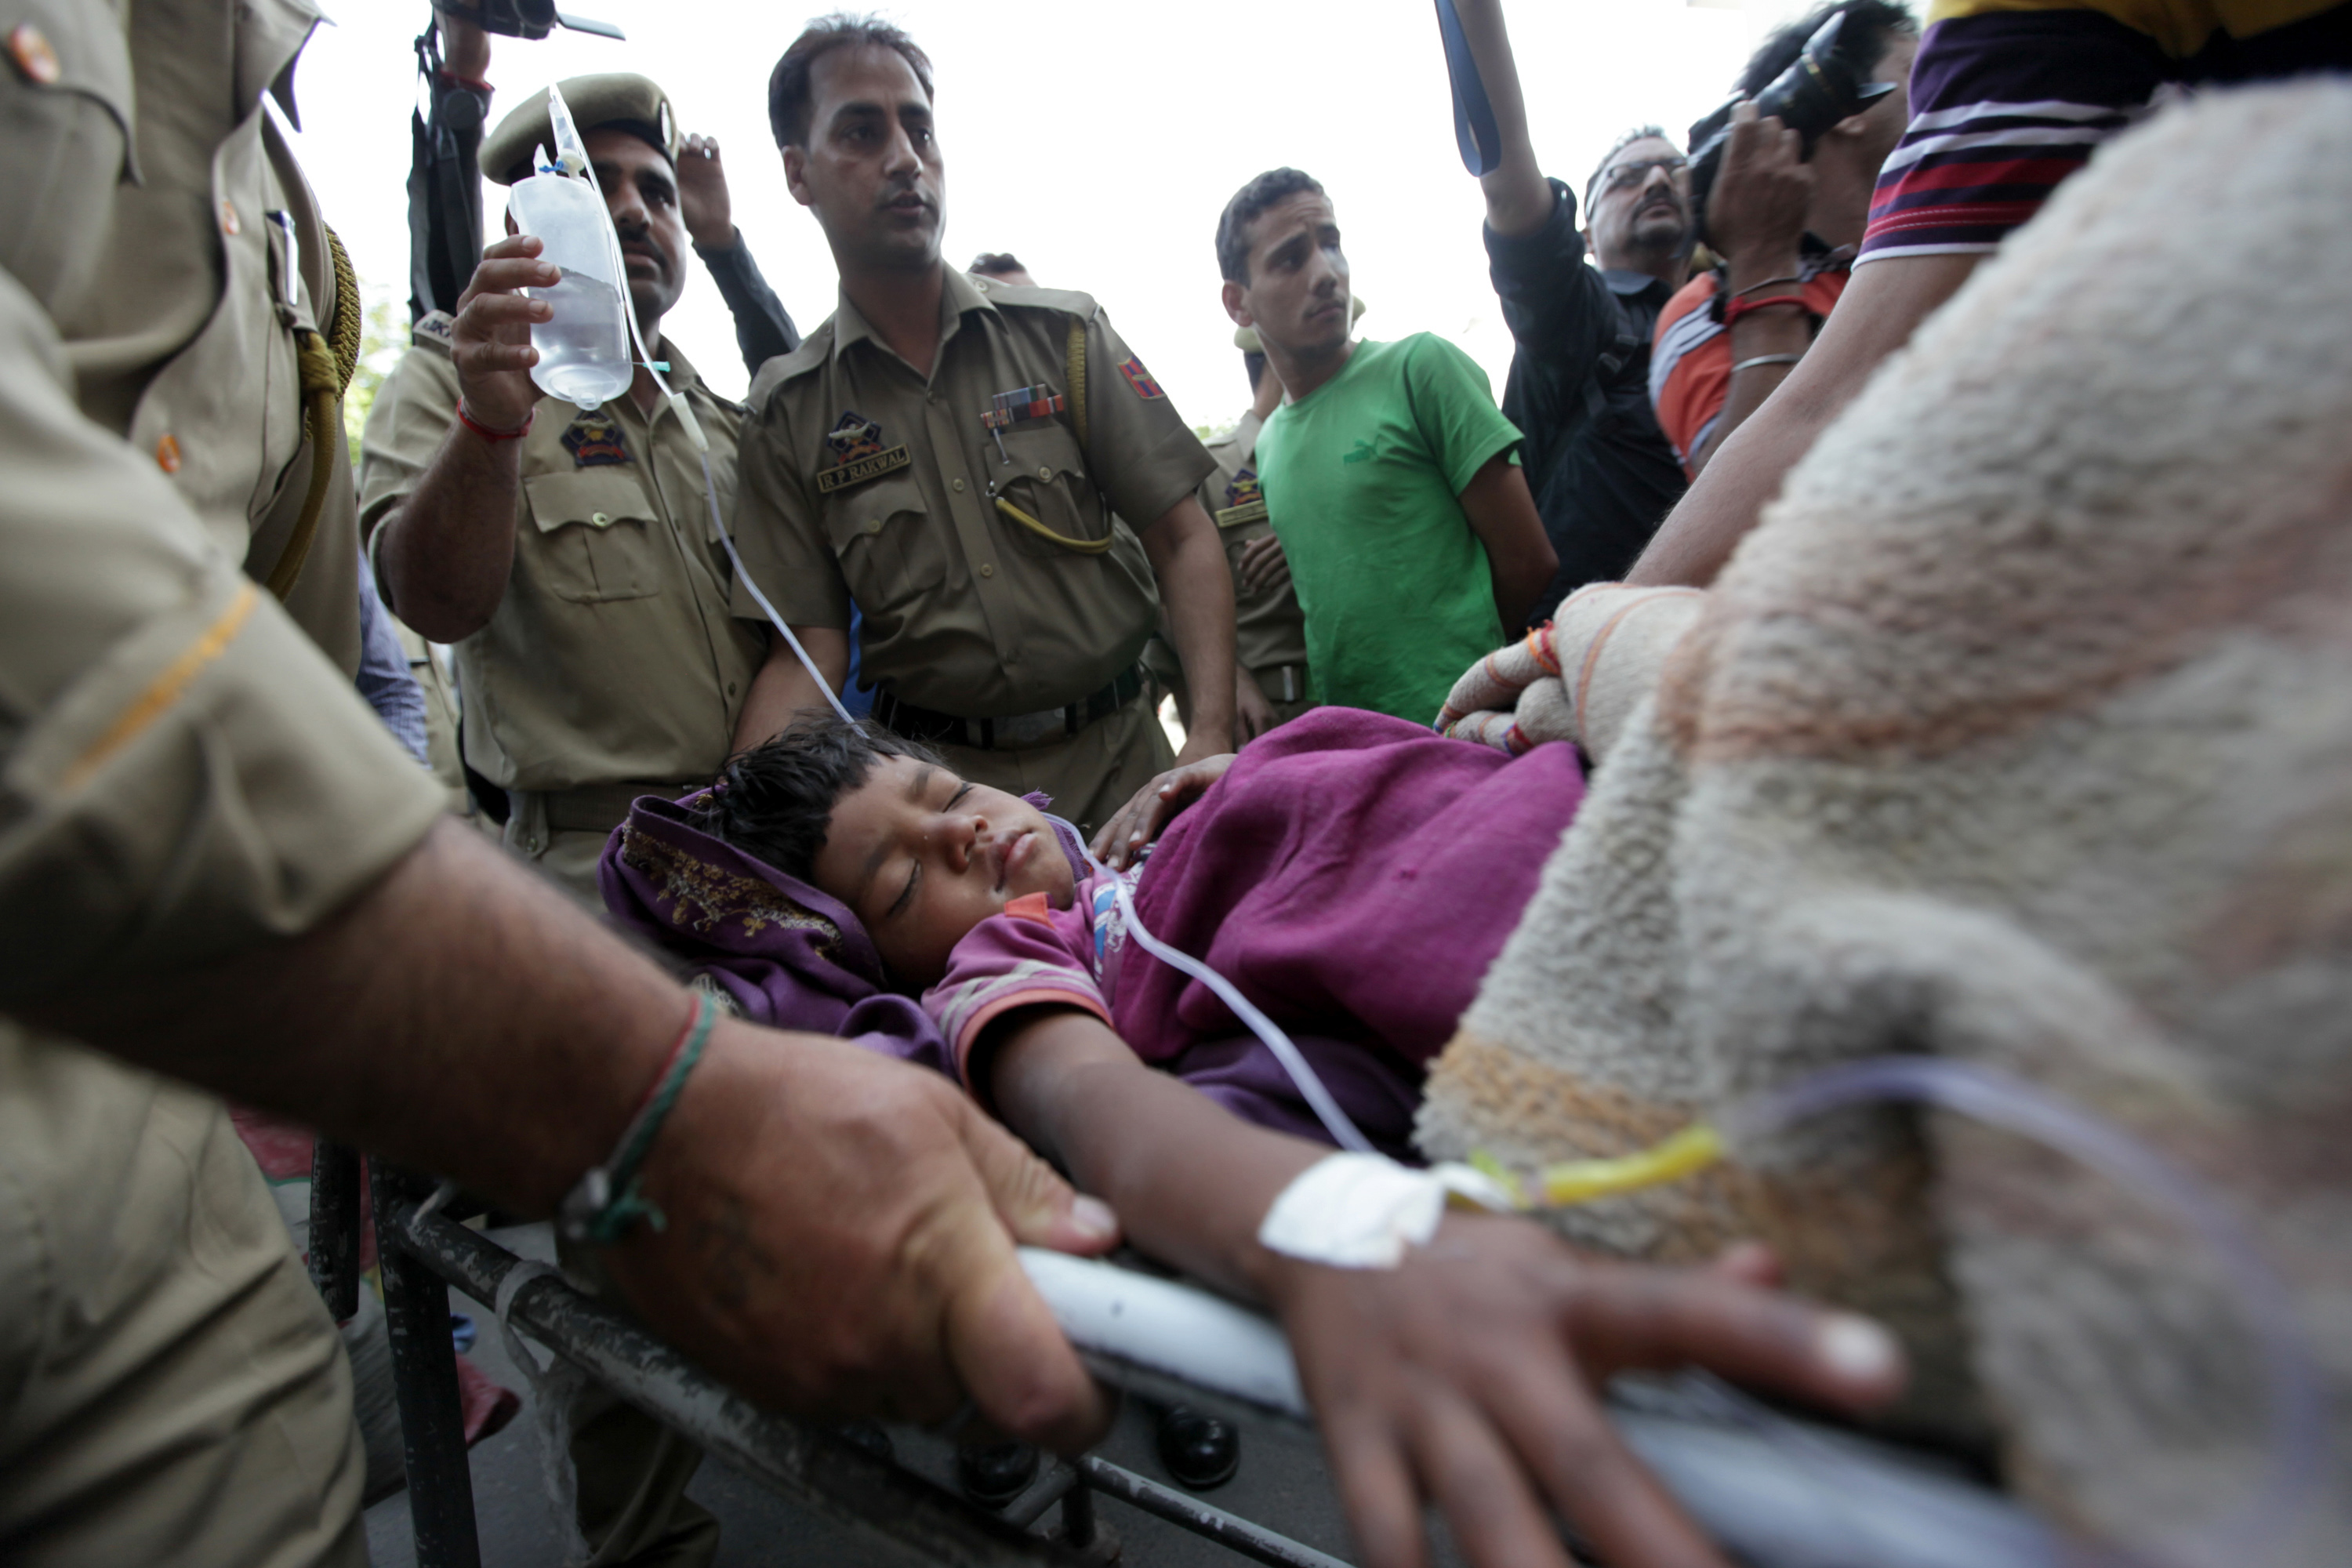 Cutremur in India: autoritatile anunta cel putin 2 morti si 70 de raniti. GALERIE FOTO